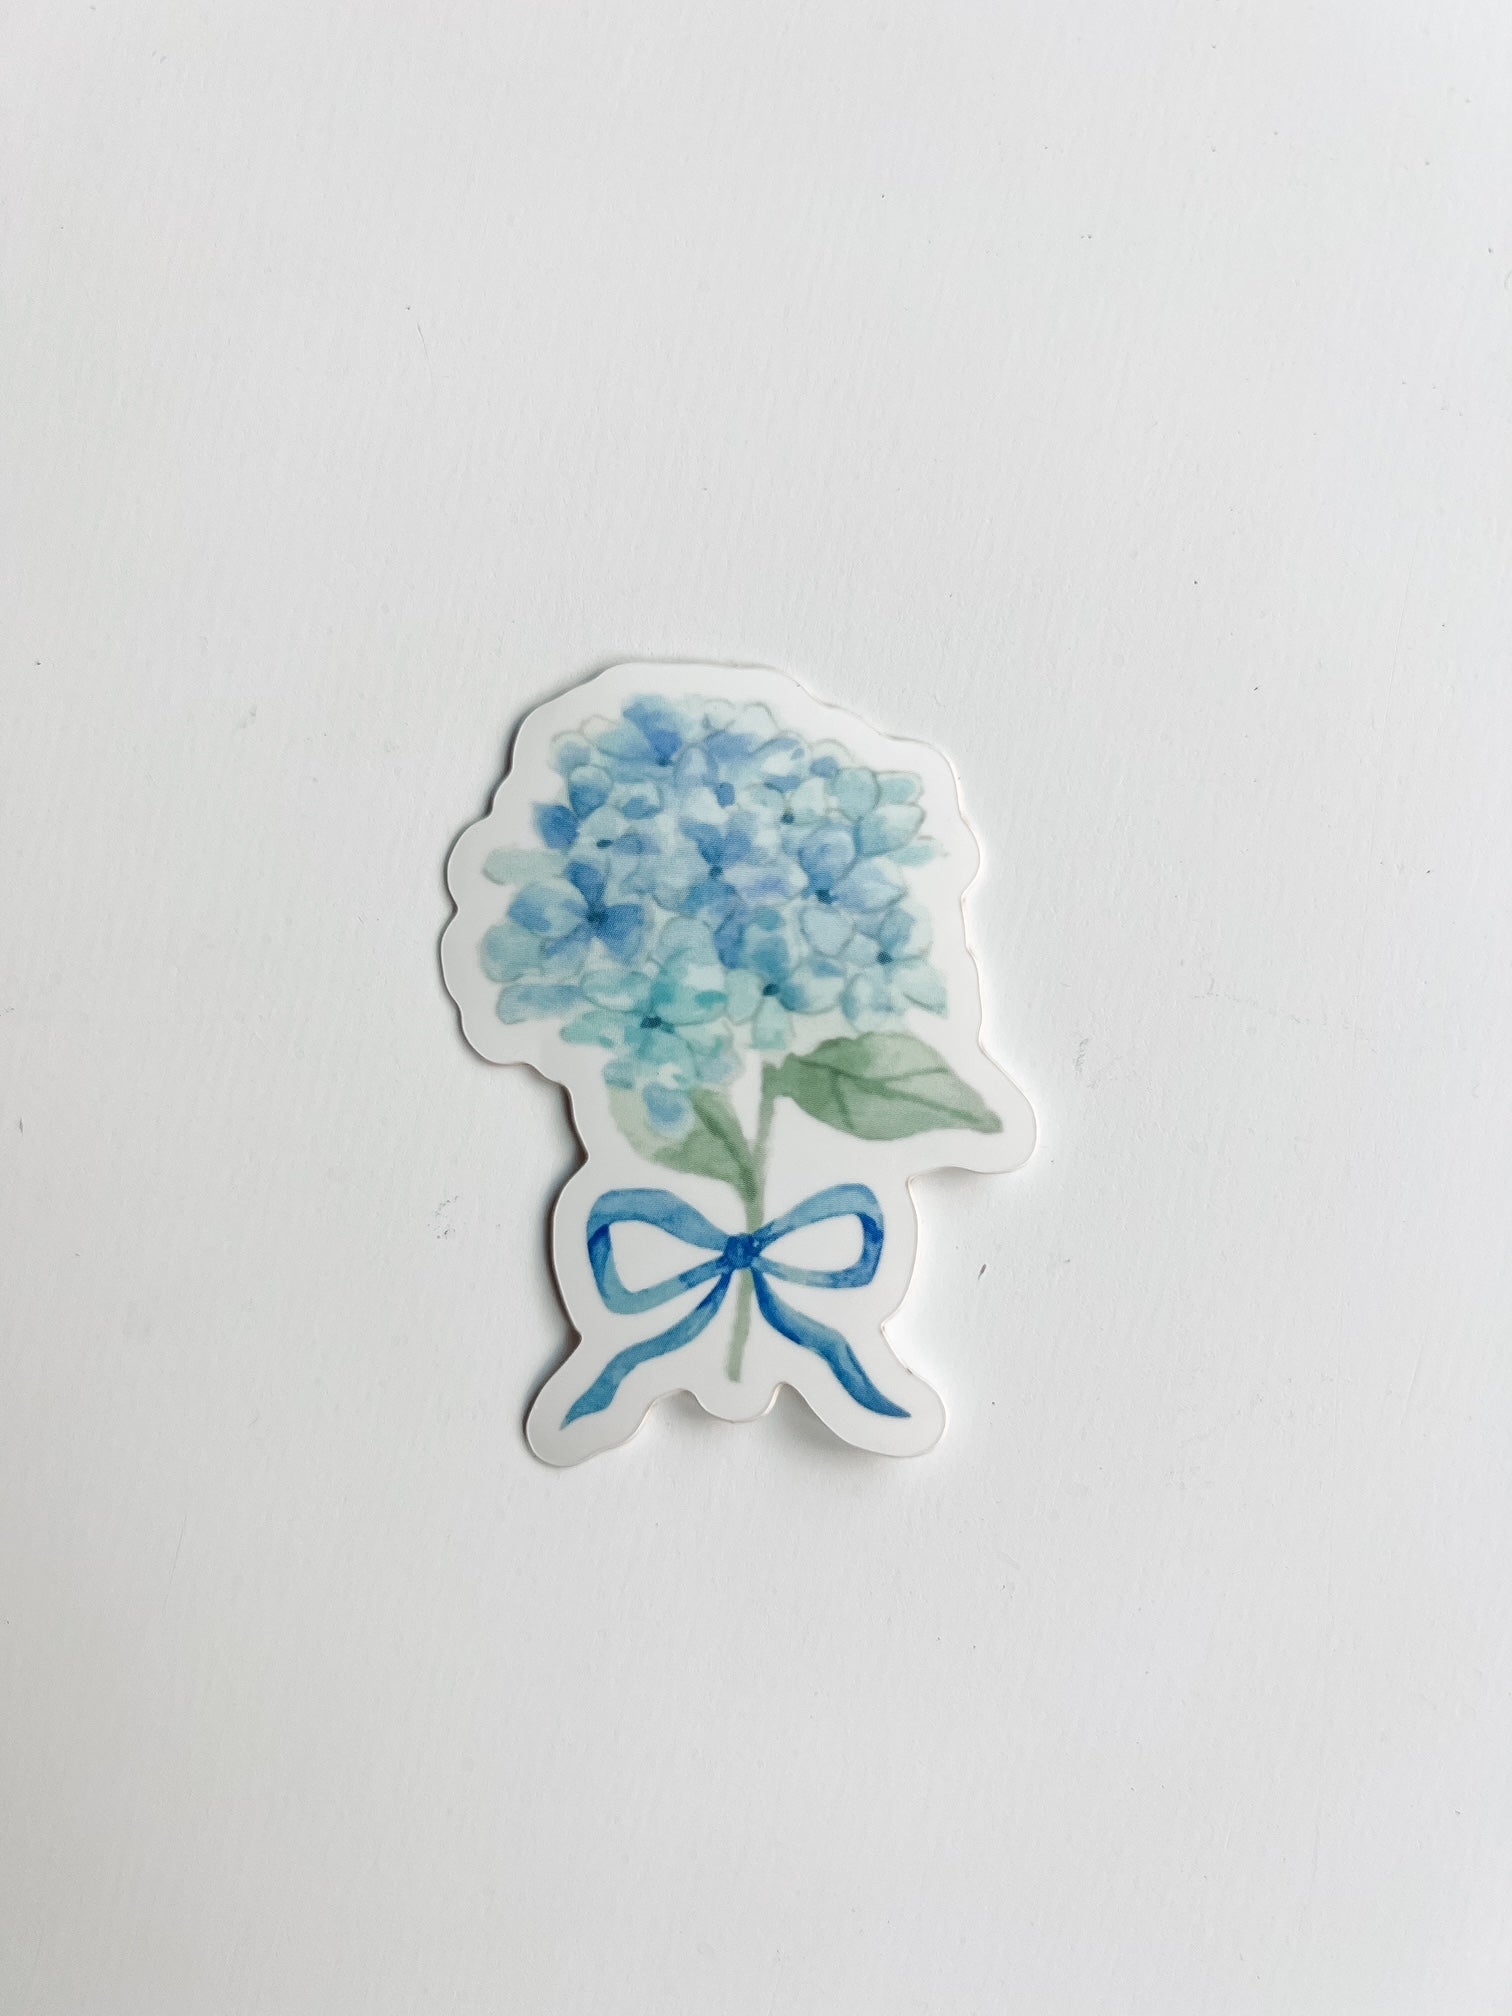 Blue hydrangea flower sticker with a blue bow